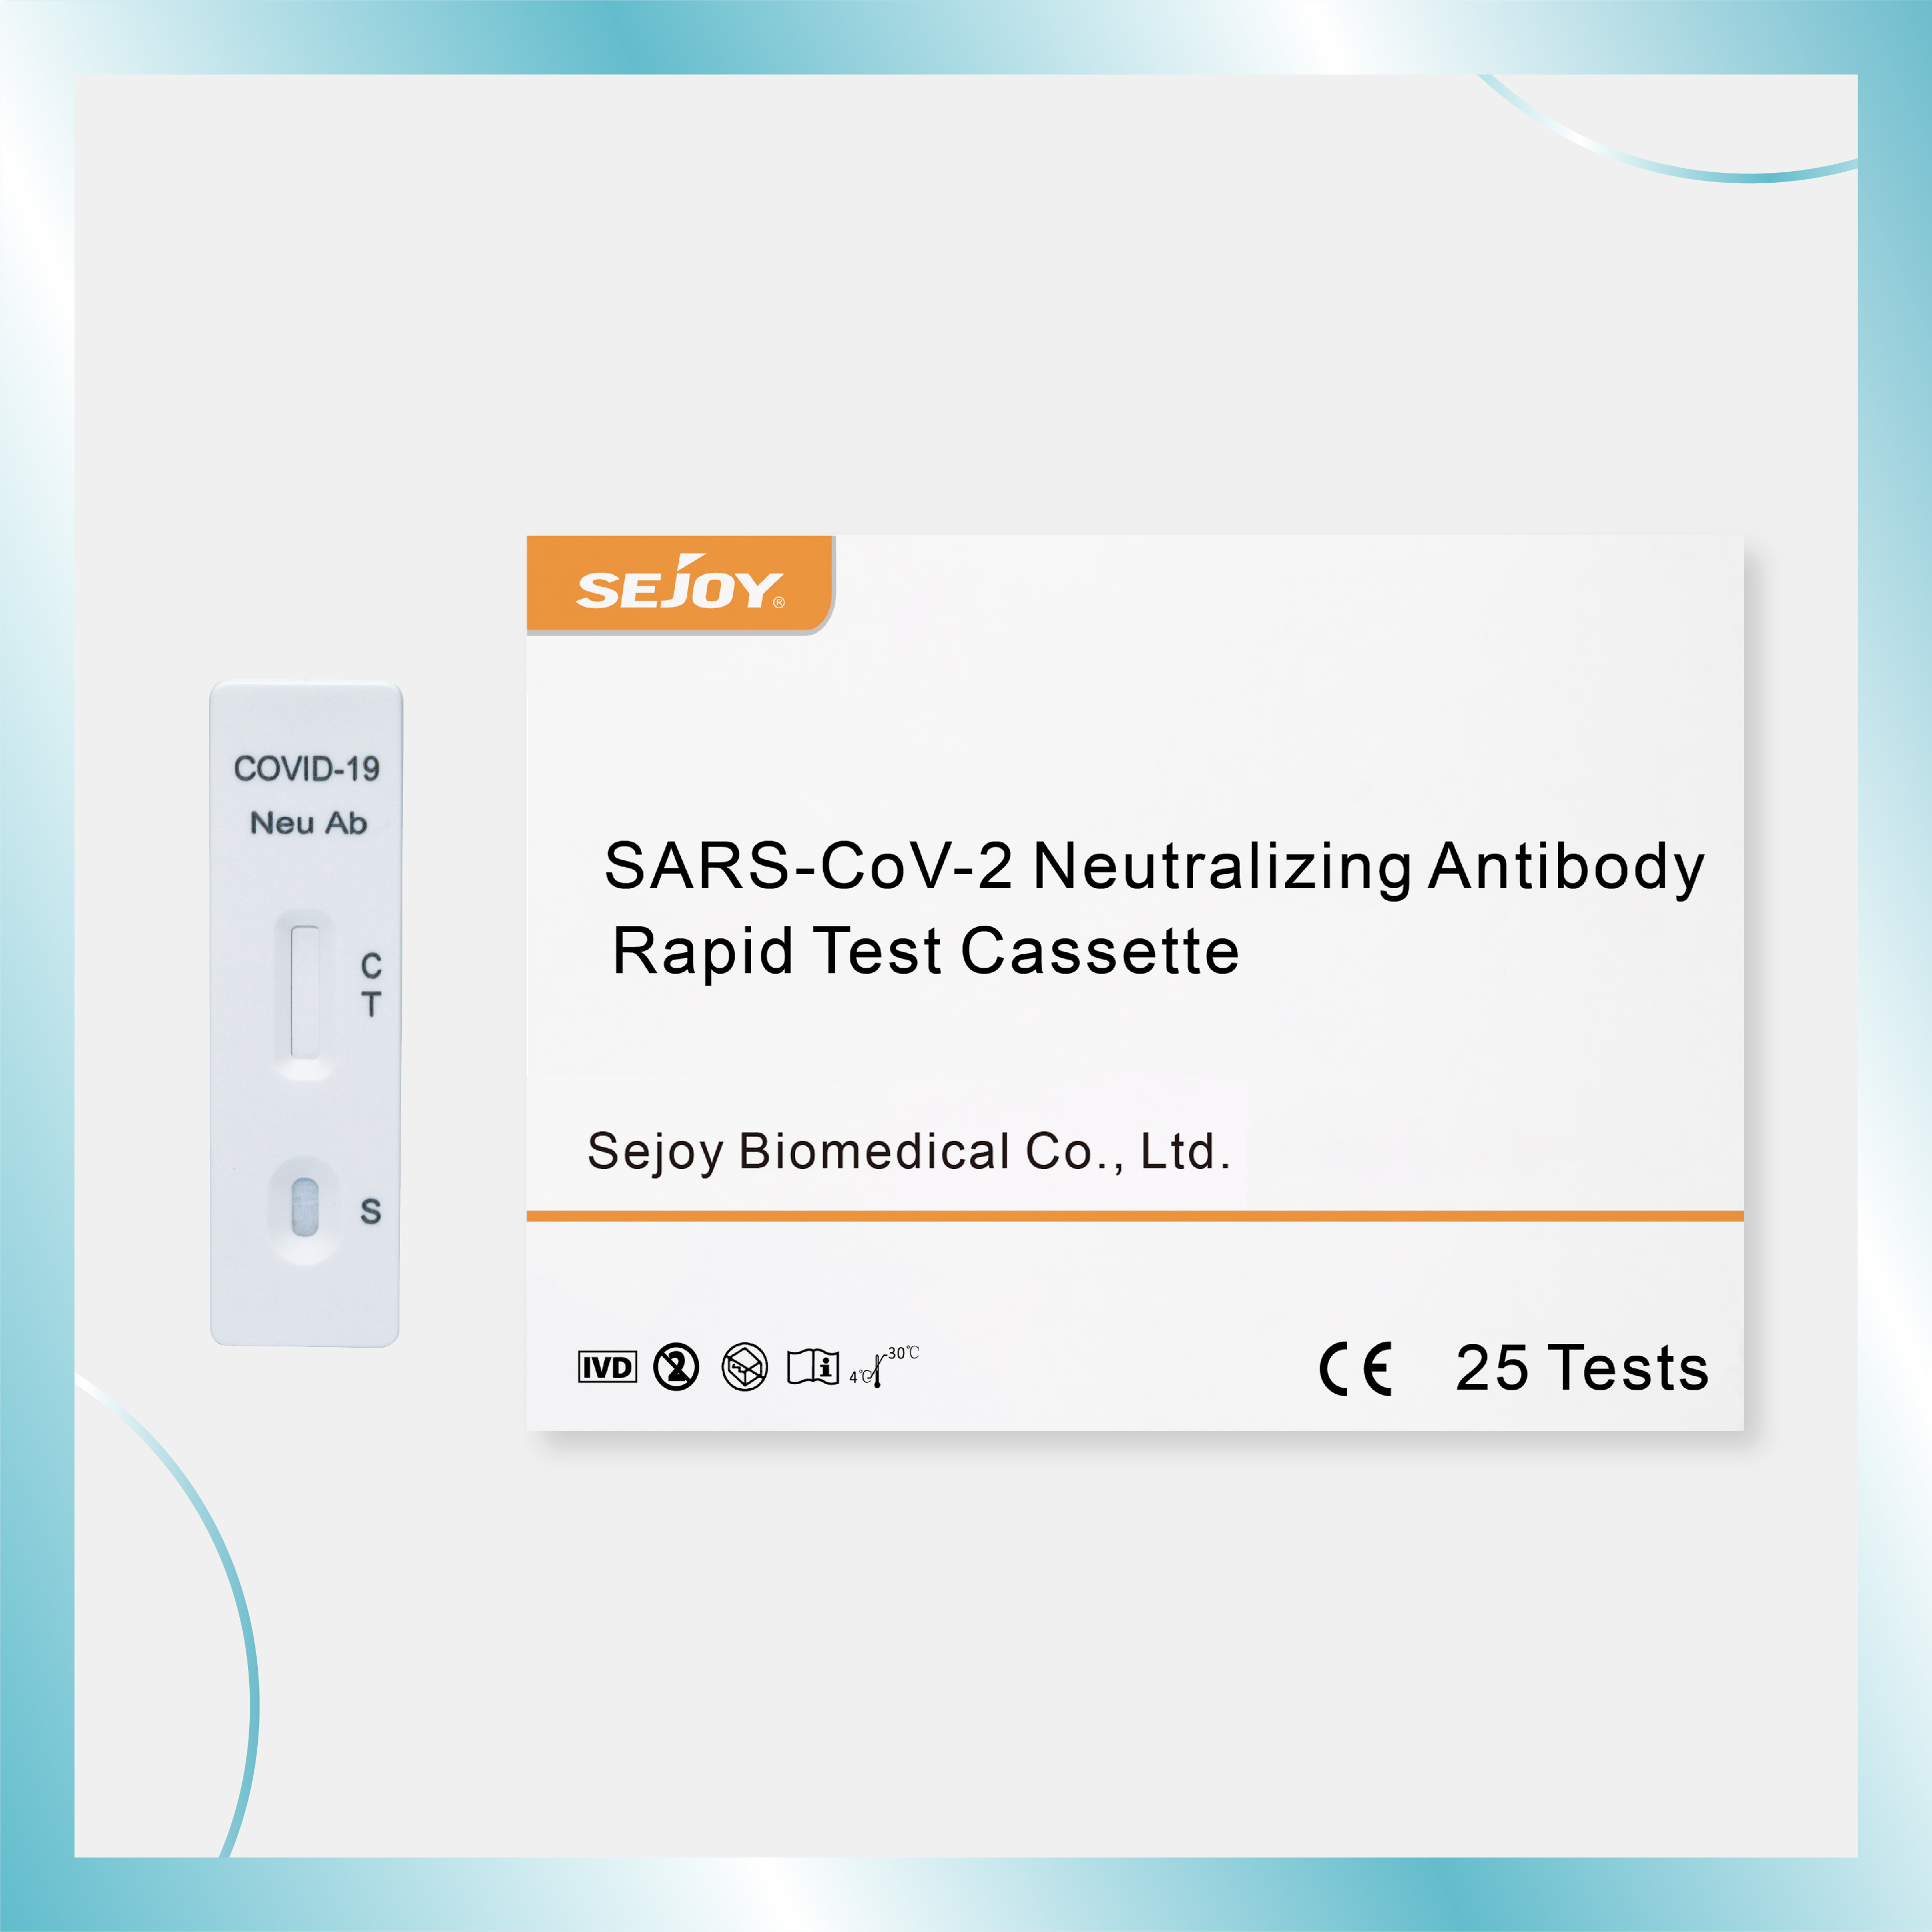 SARS-CoV-2 Neutralizing Antibody Rapid Test Cassette